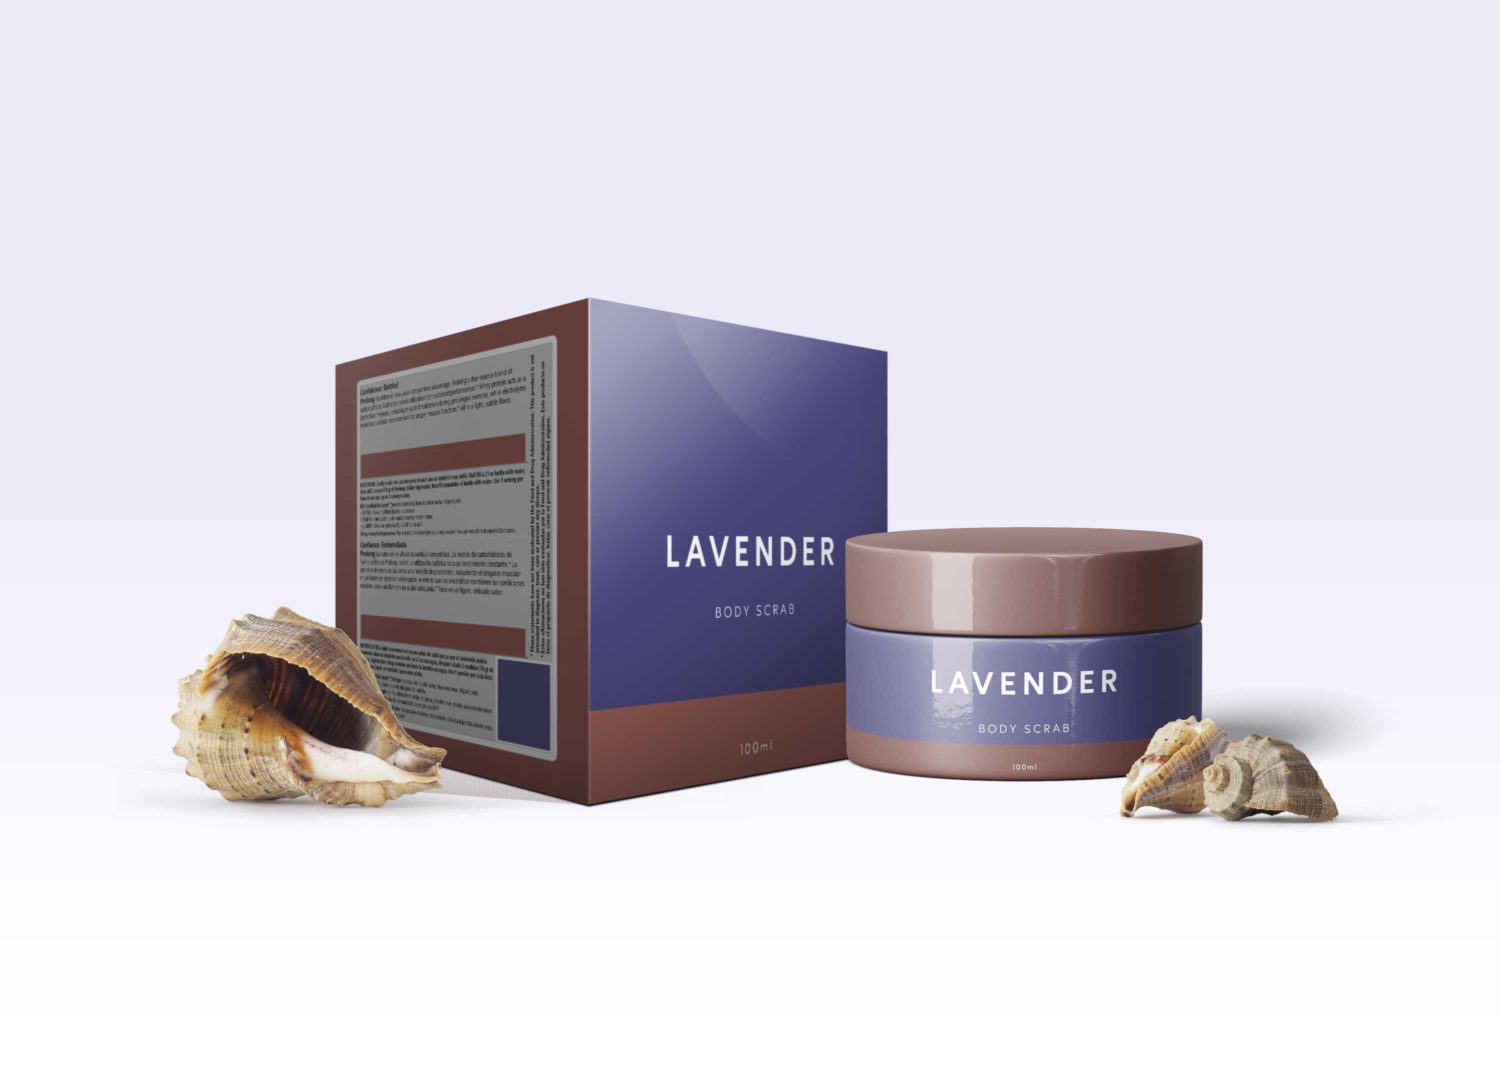 Lavender Body Scrub Packaging Mockup